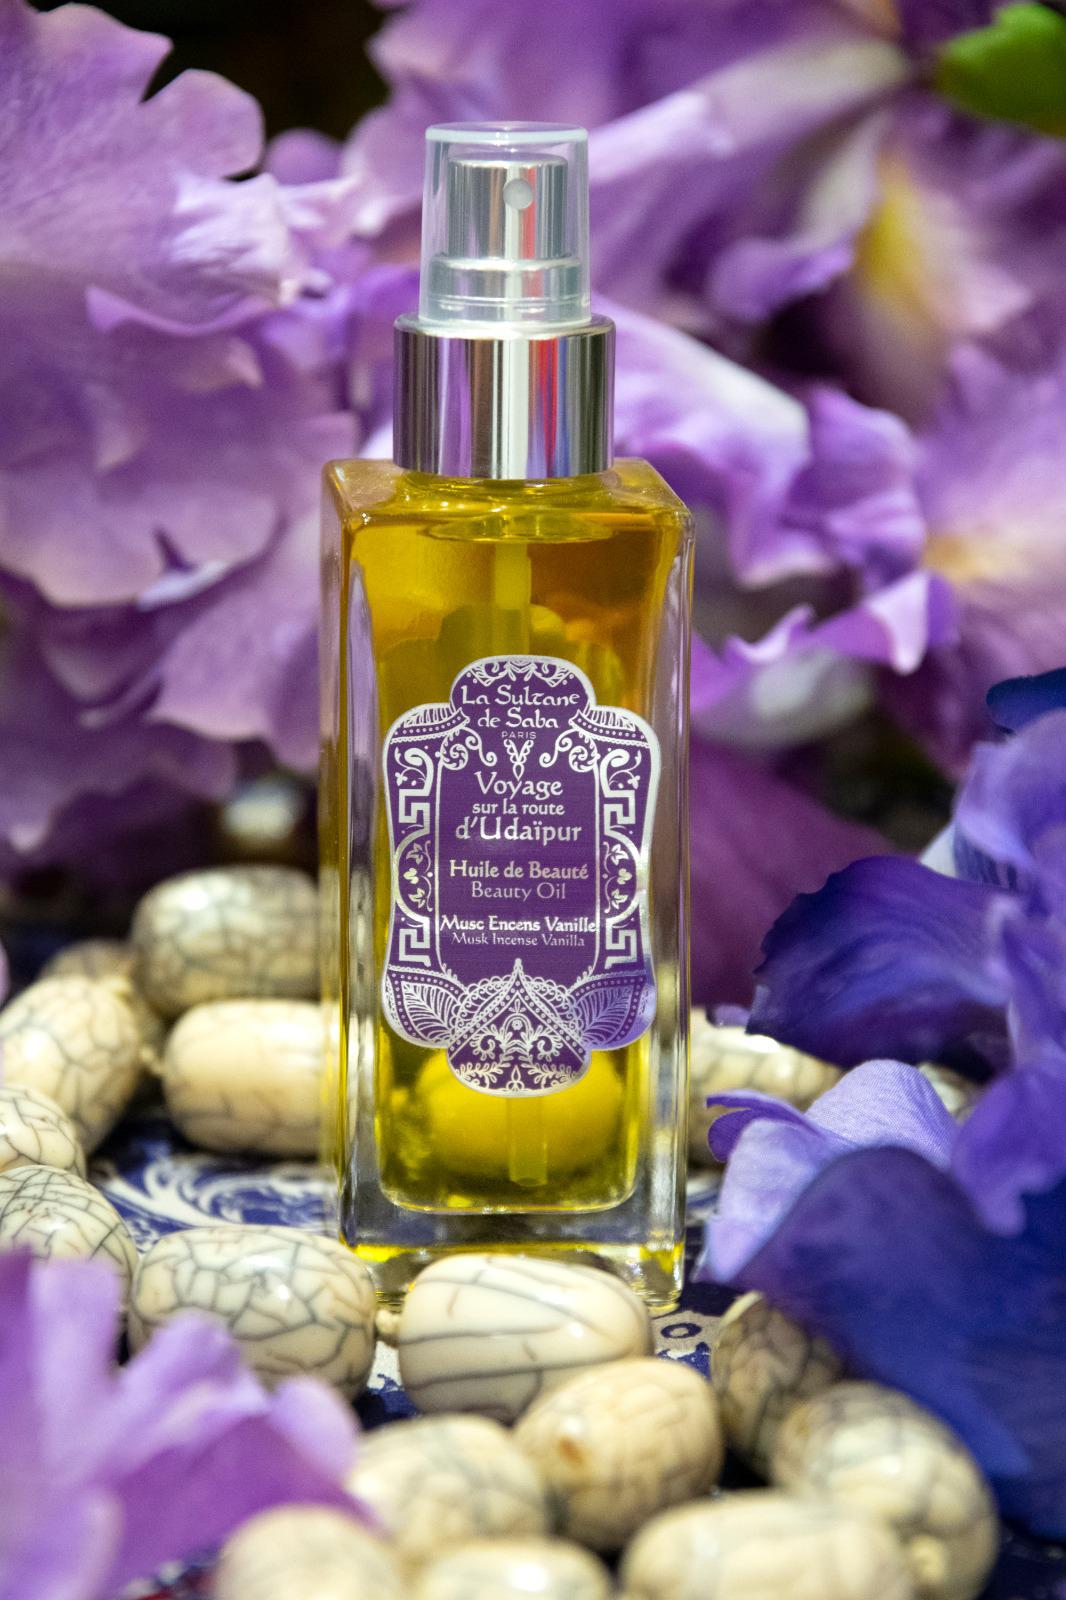 Beauty Oil 200ml - Musk Incense Vanilla Fragrance